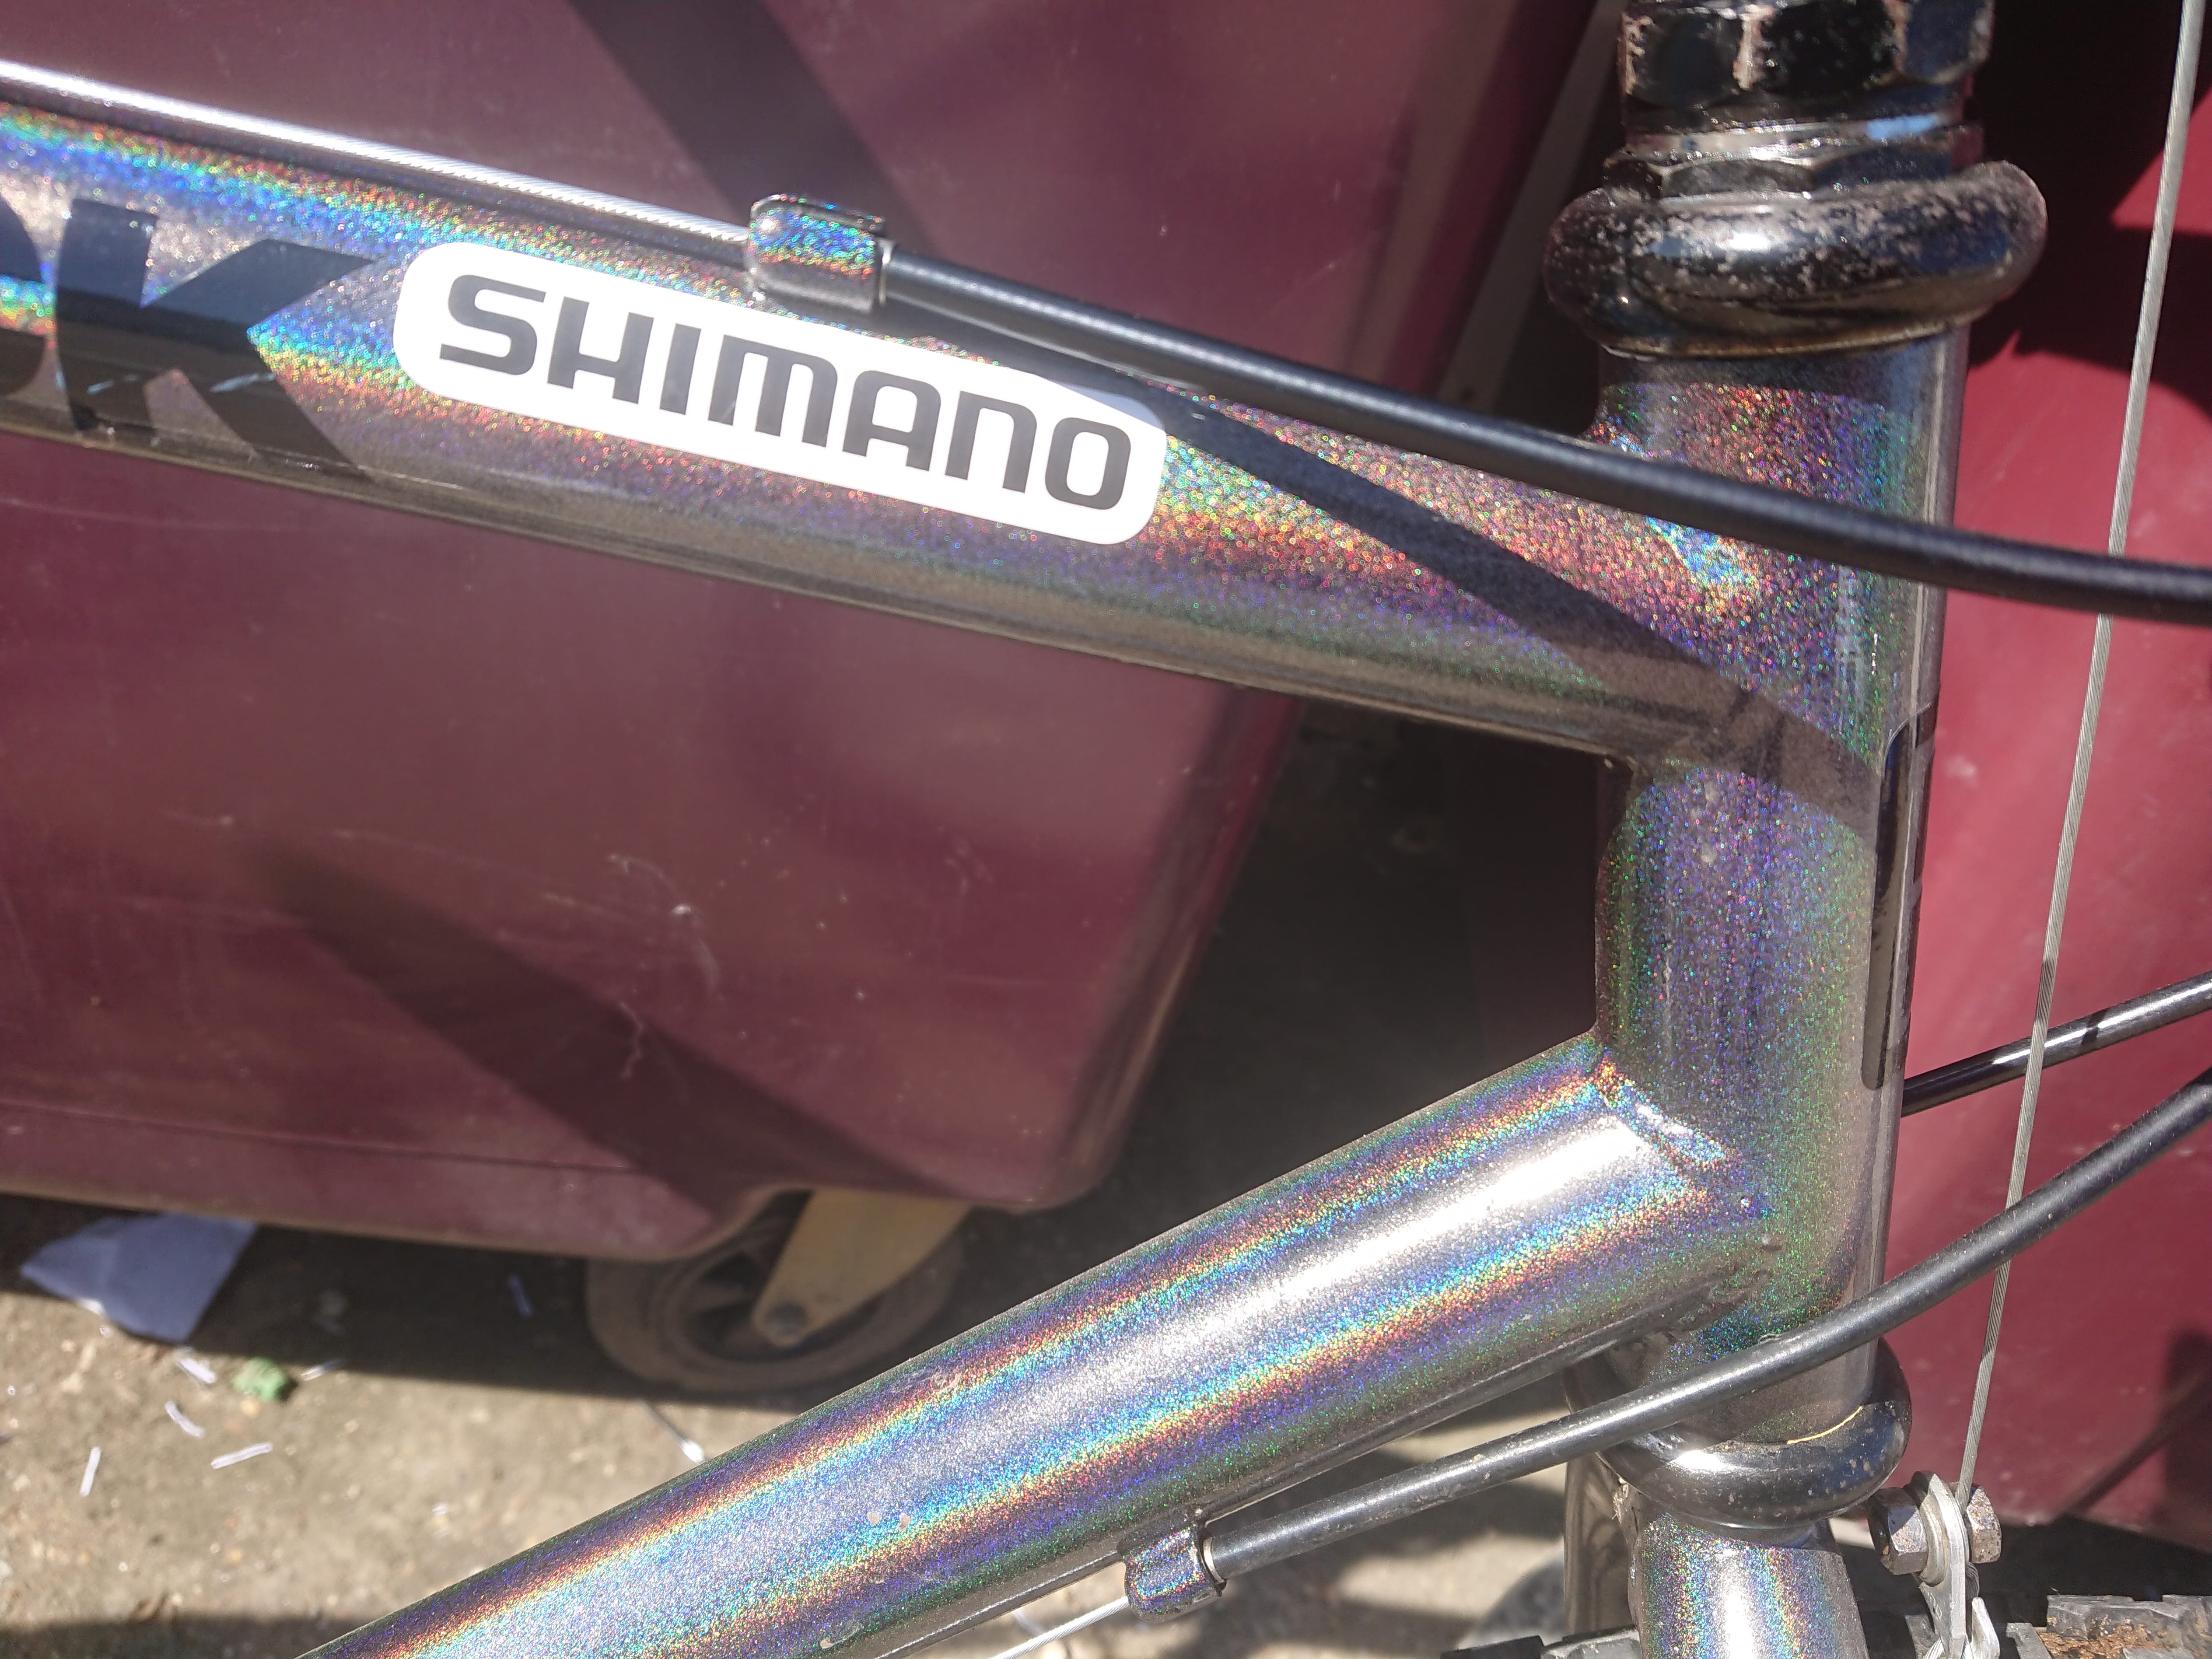 Bike frame and sticker